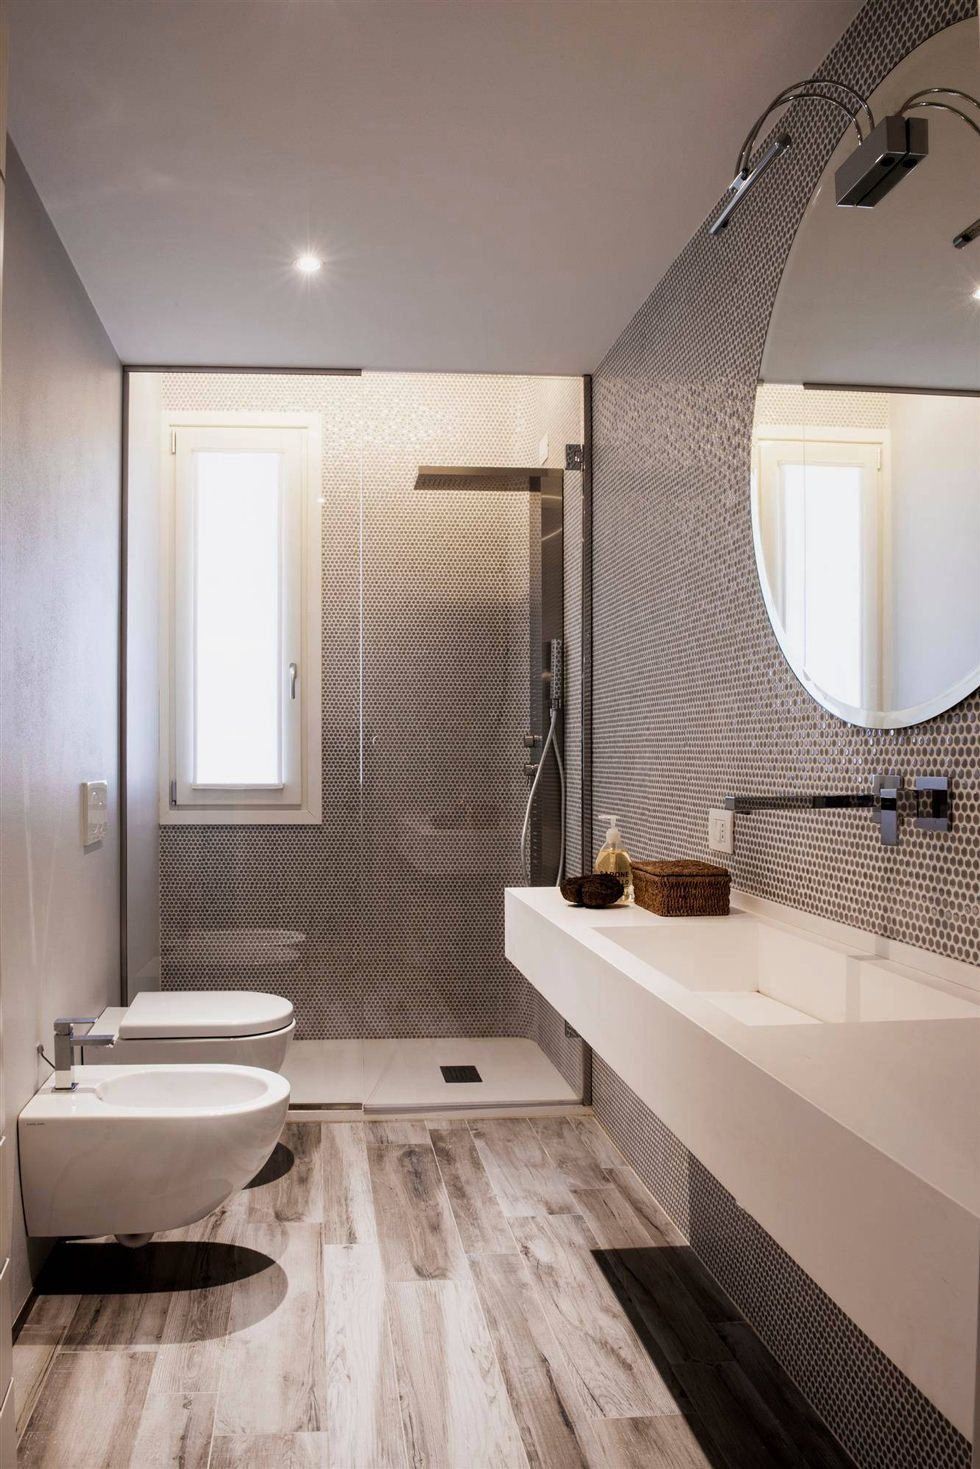 Дизайн ванной комнаты вытянутой формы